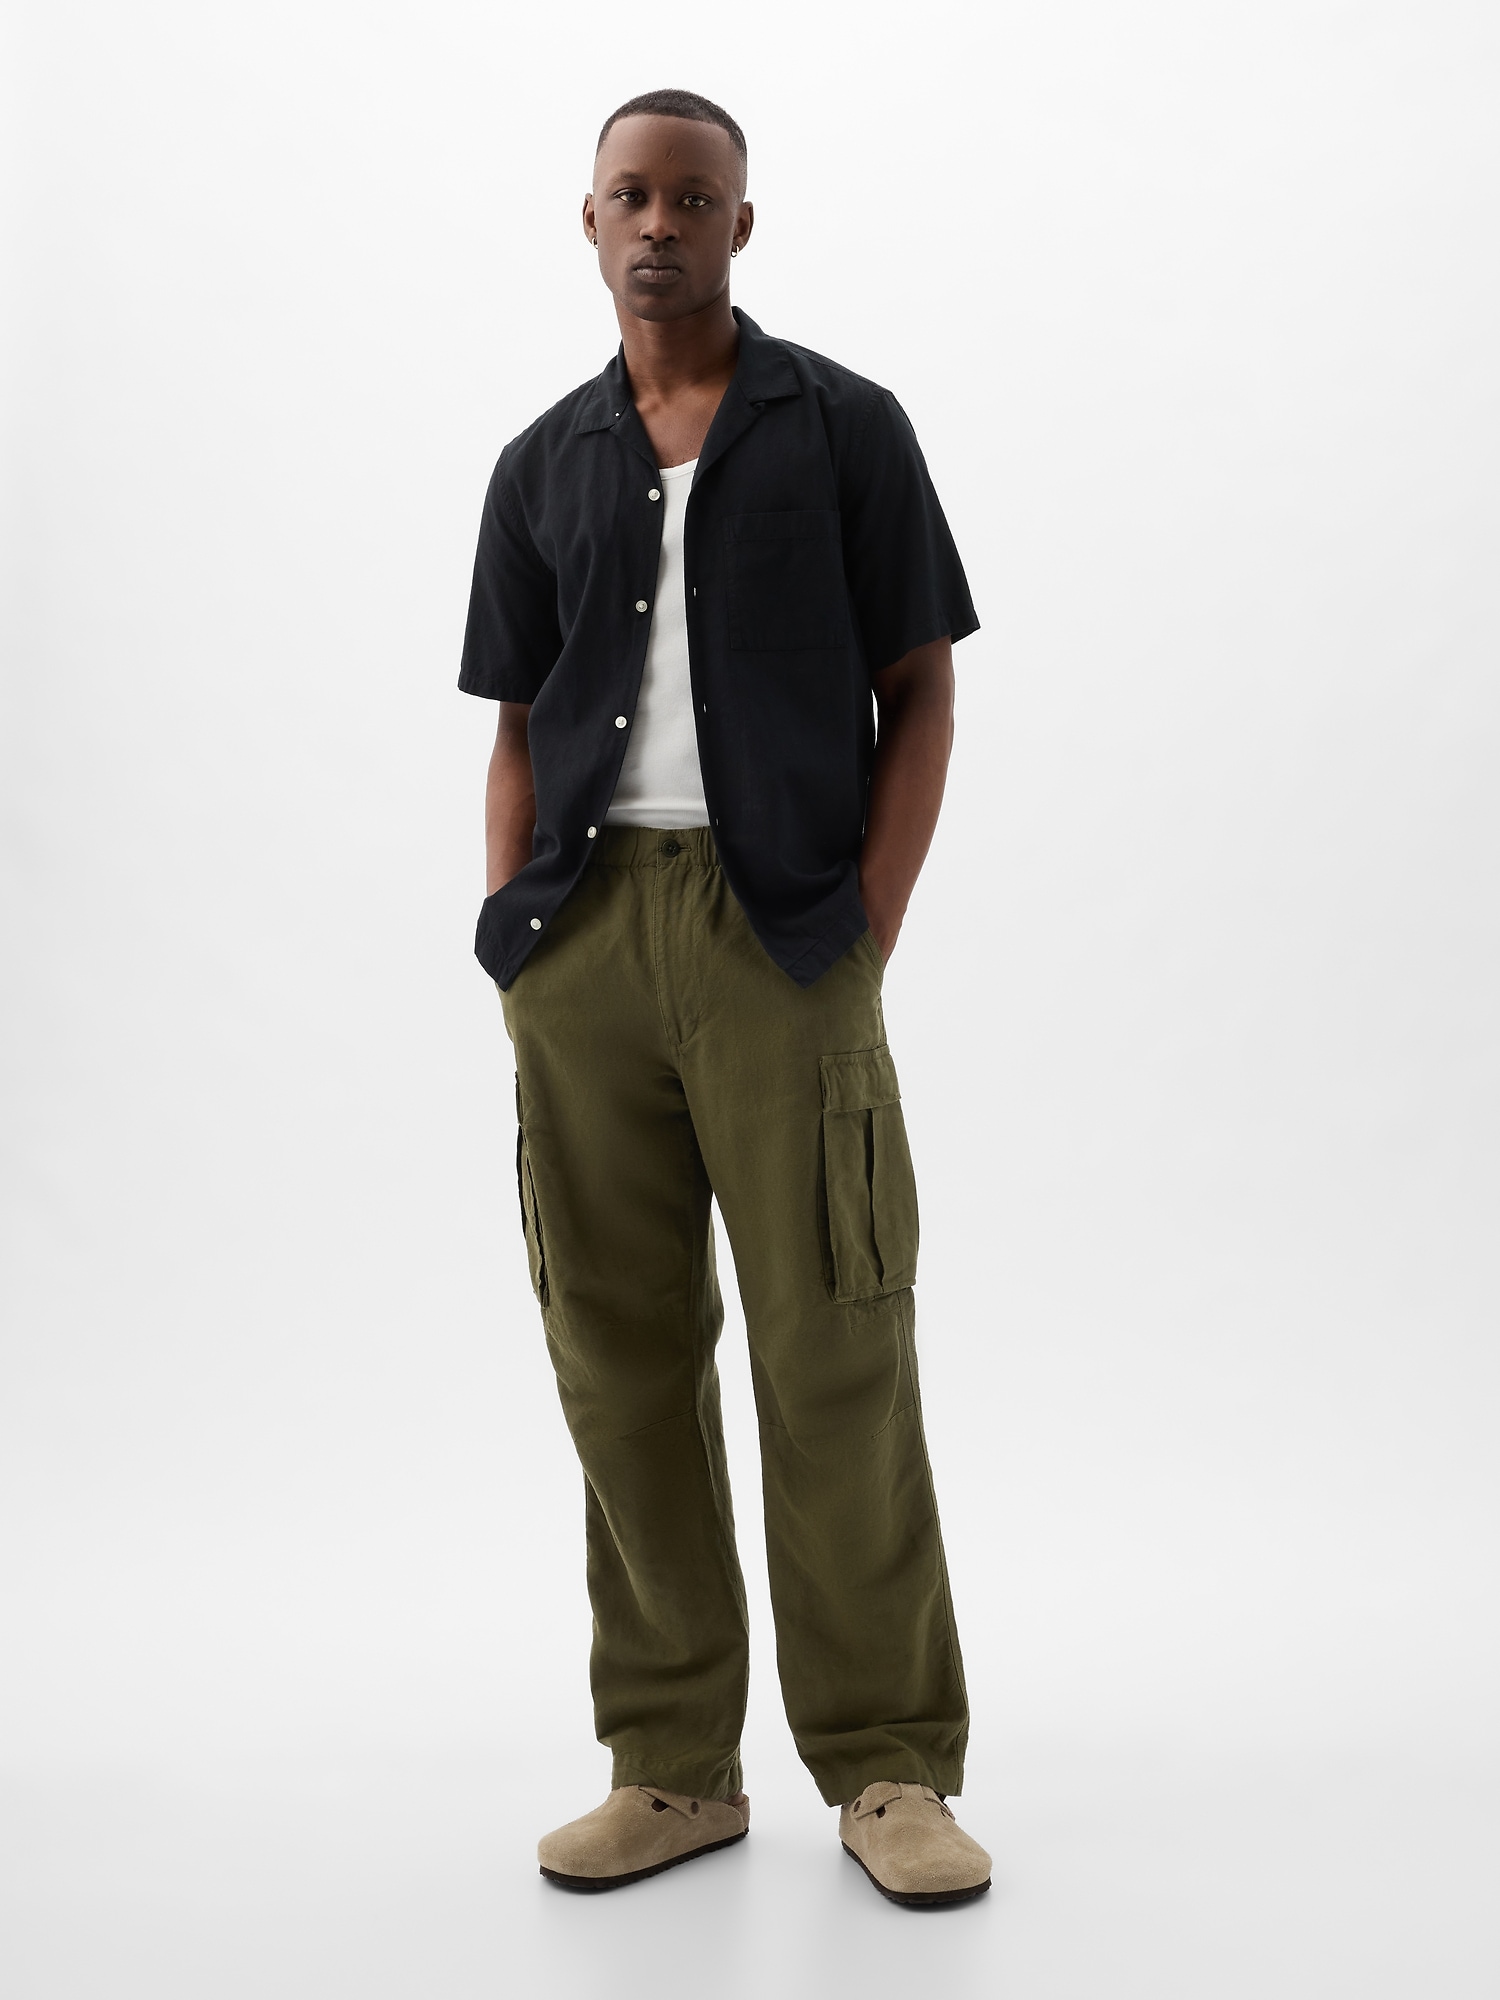 Gap Men's Cotton Khaki Slim Taper Fit Cargo Pants in Acorn Brown $80 NEW  34x32 | eBay